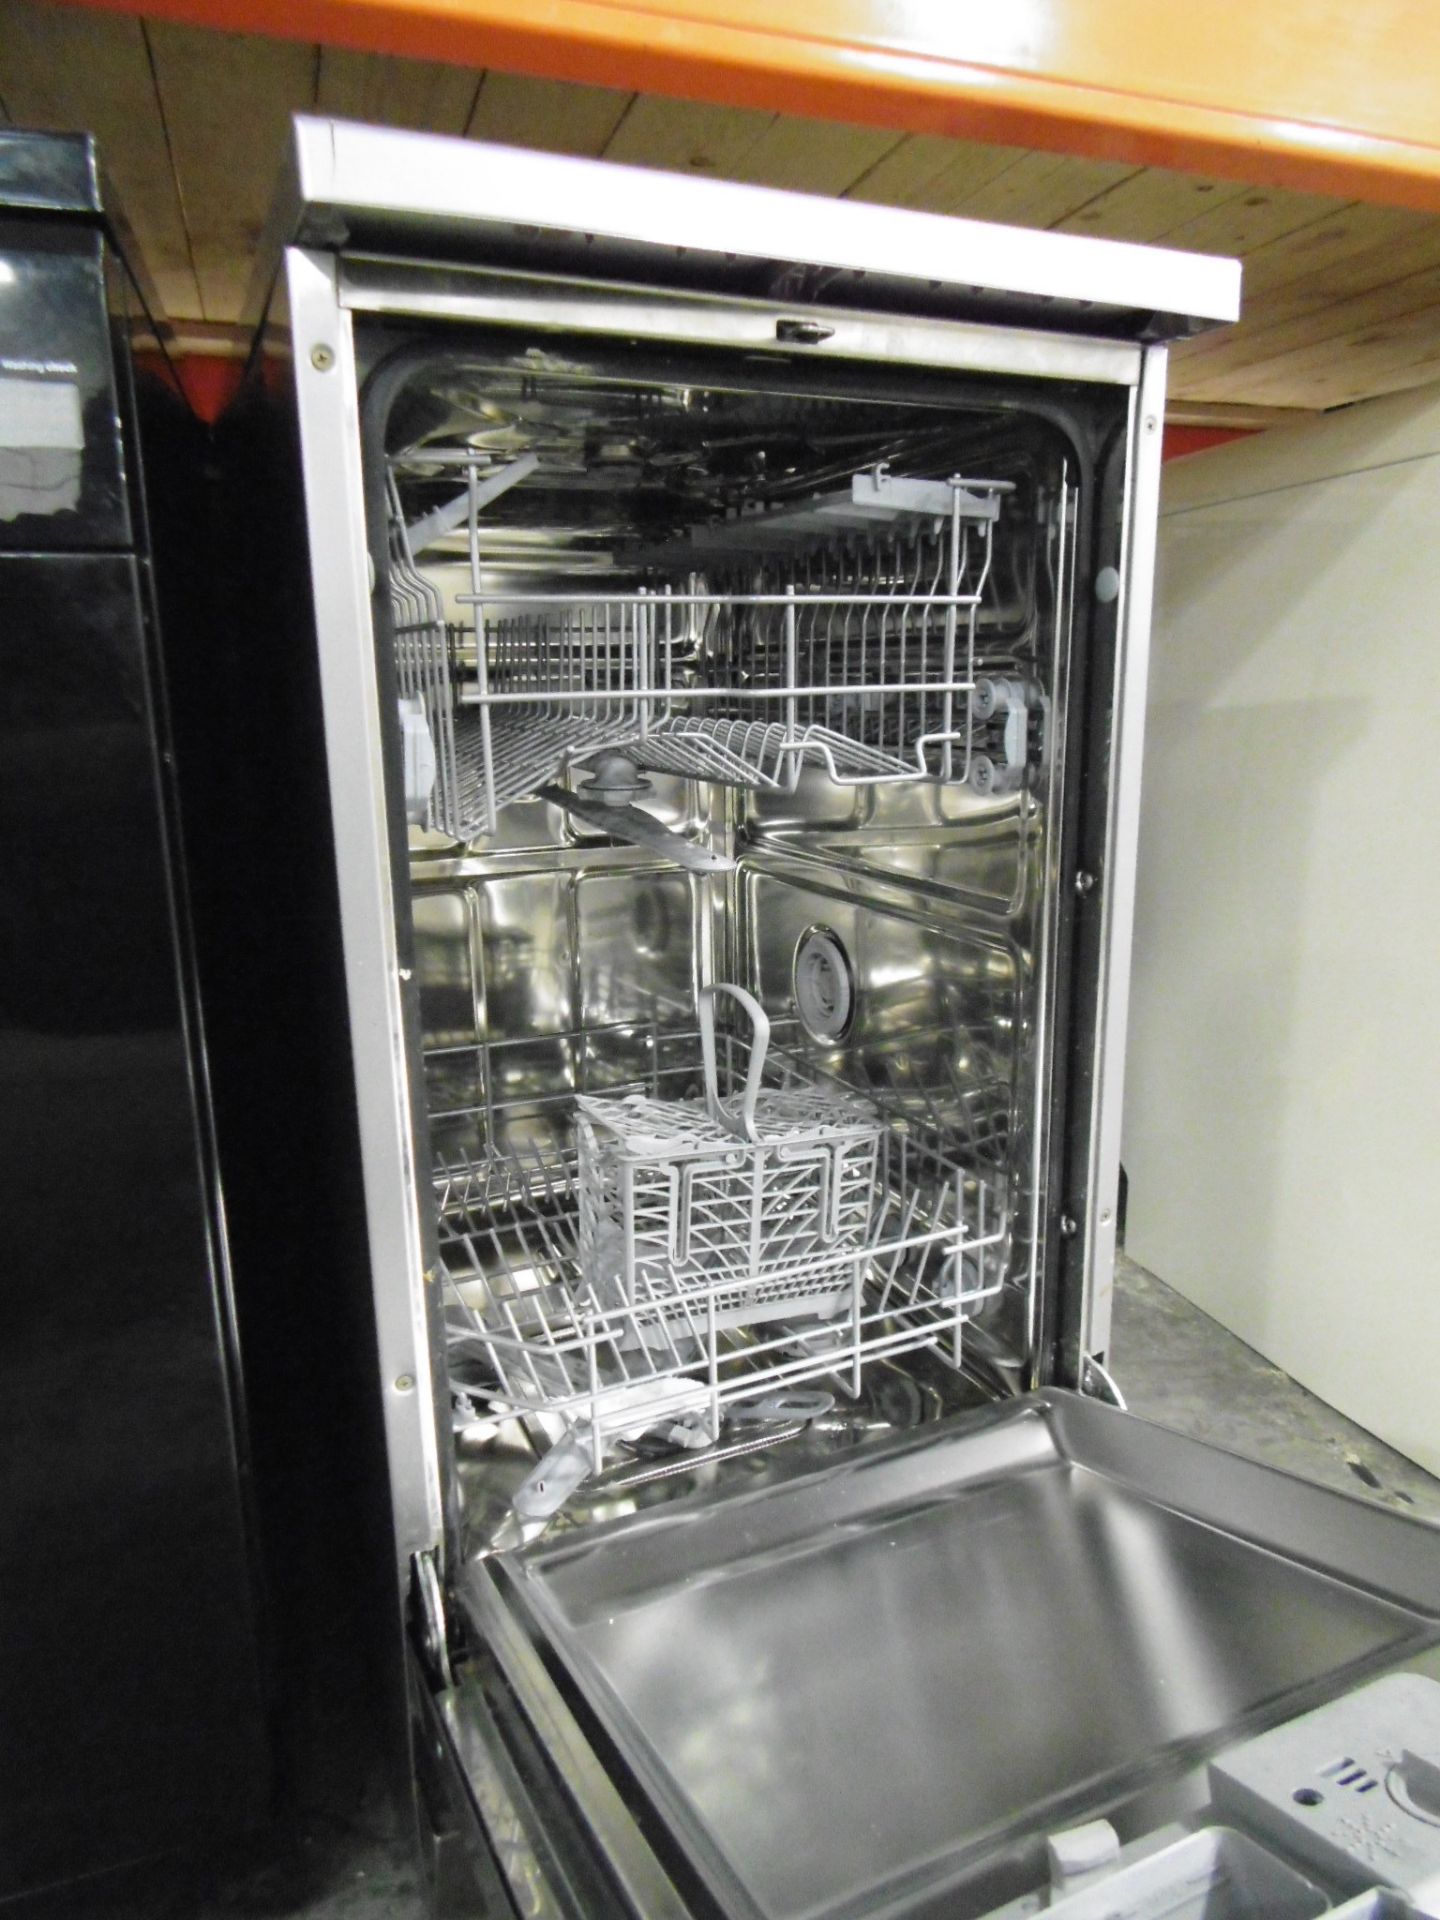 John Lewis - JLDWS907 - Stainless/Silver - Slimline 45cm Dishwasher - Image 2 of 3